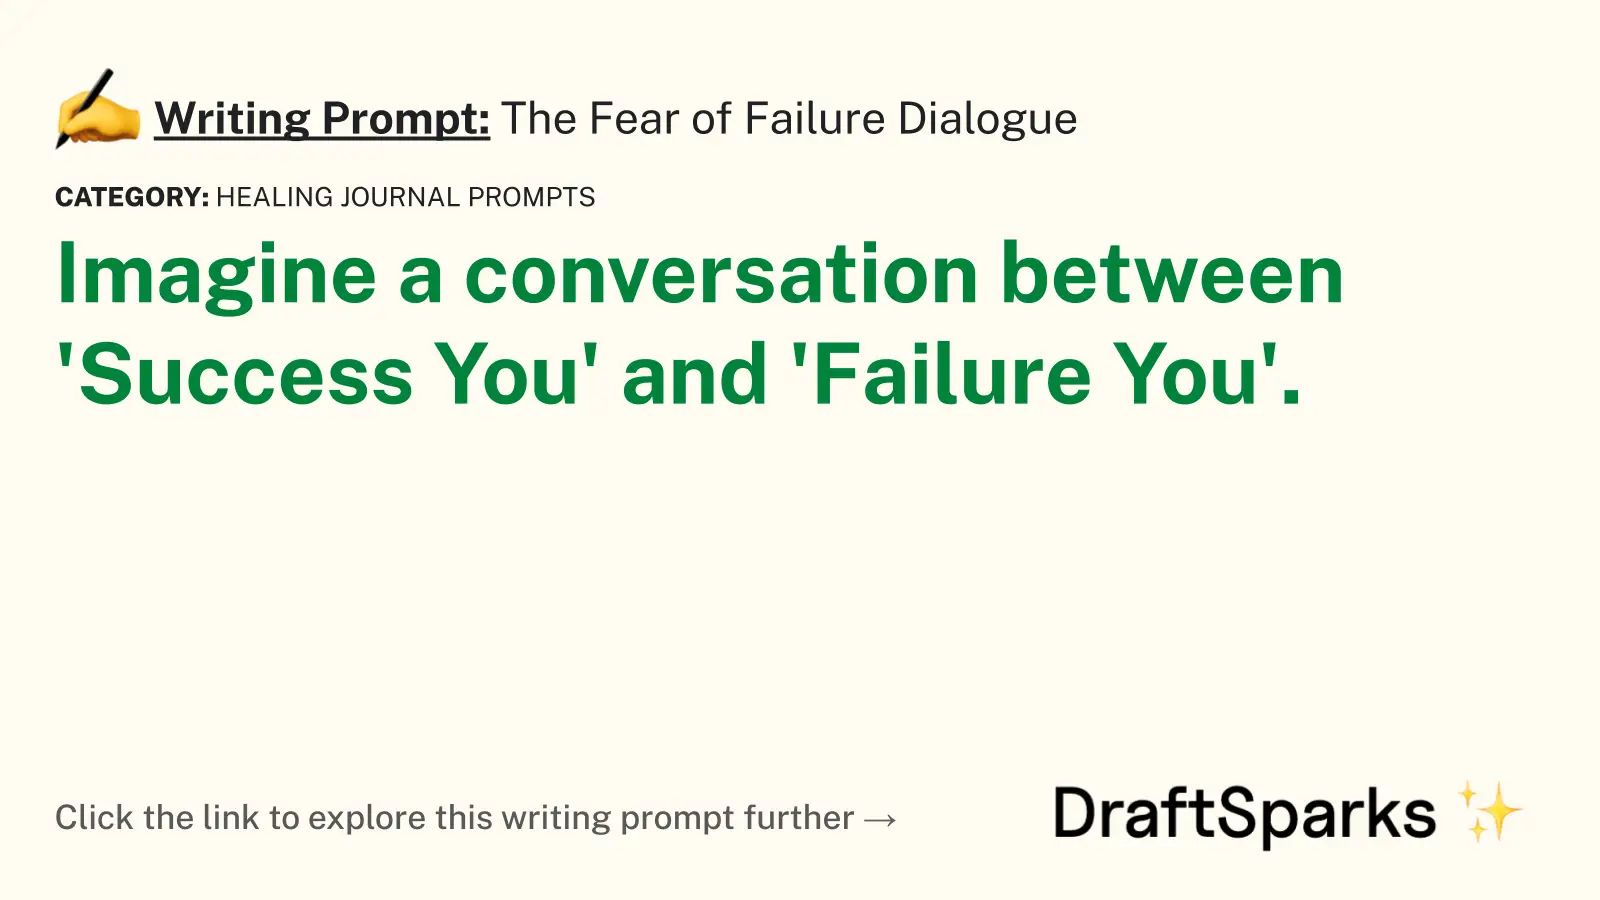 The Fear of Failure Dialogue